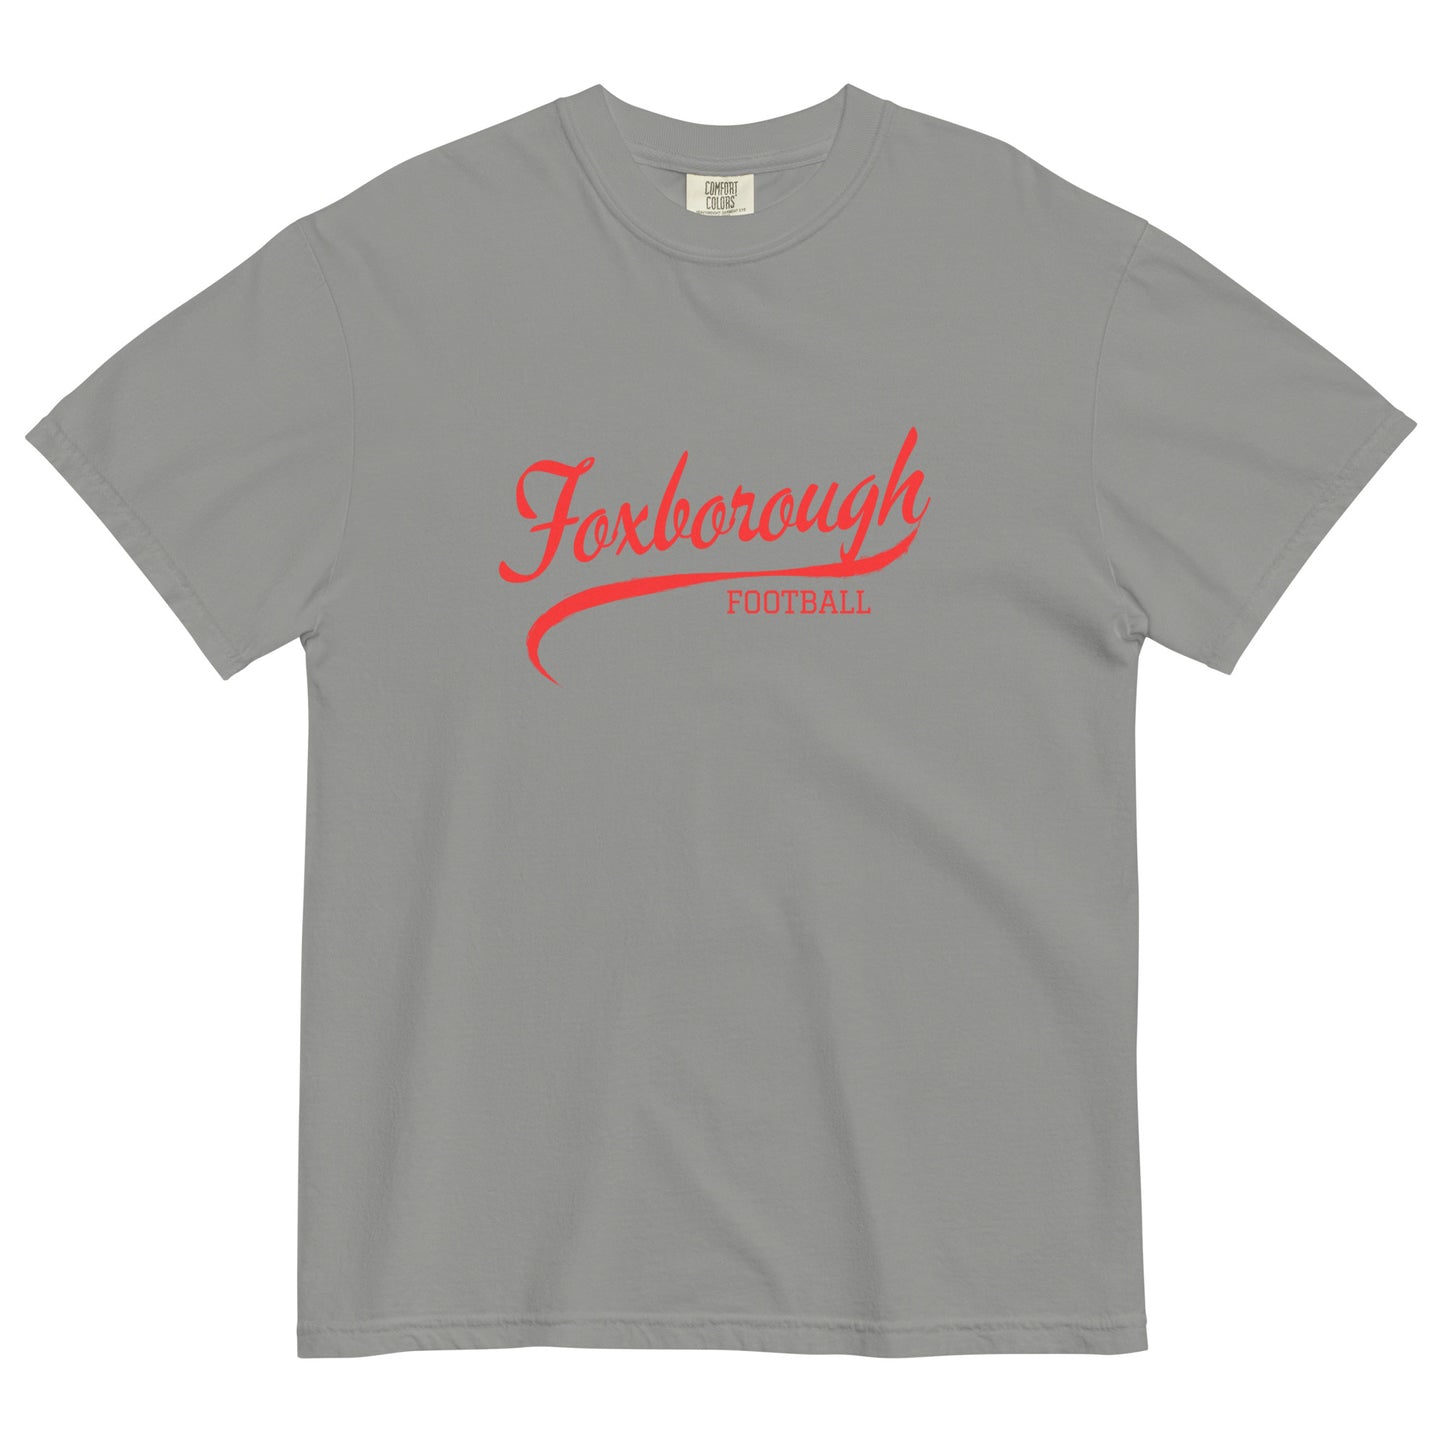 Foxborough Football Script T-Shirt